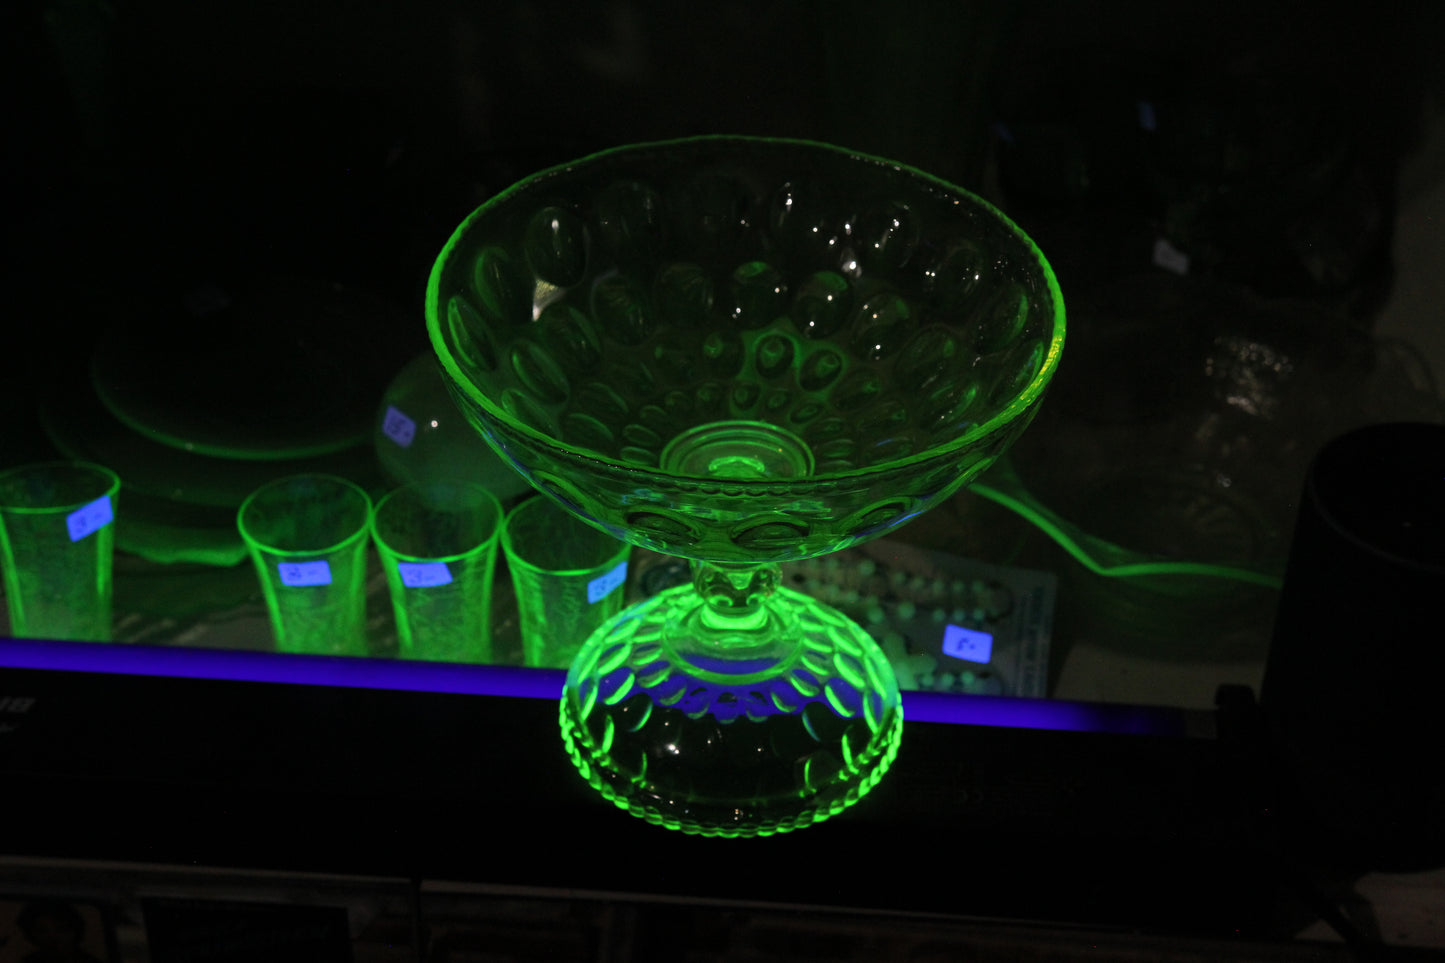 Large Uranium Vaseline Depression Glass Pedastal Bowl with Bubble Pattern